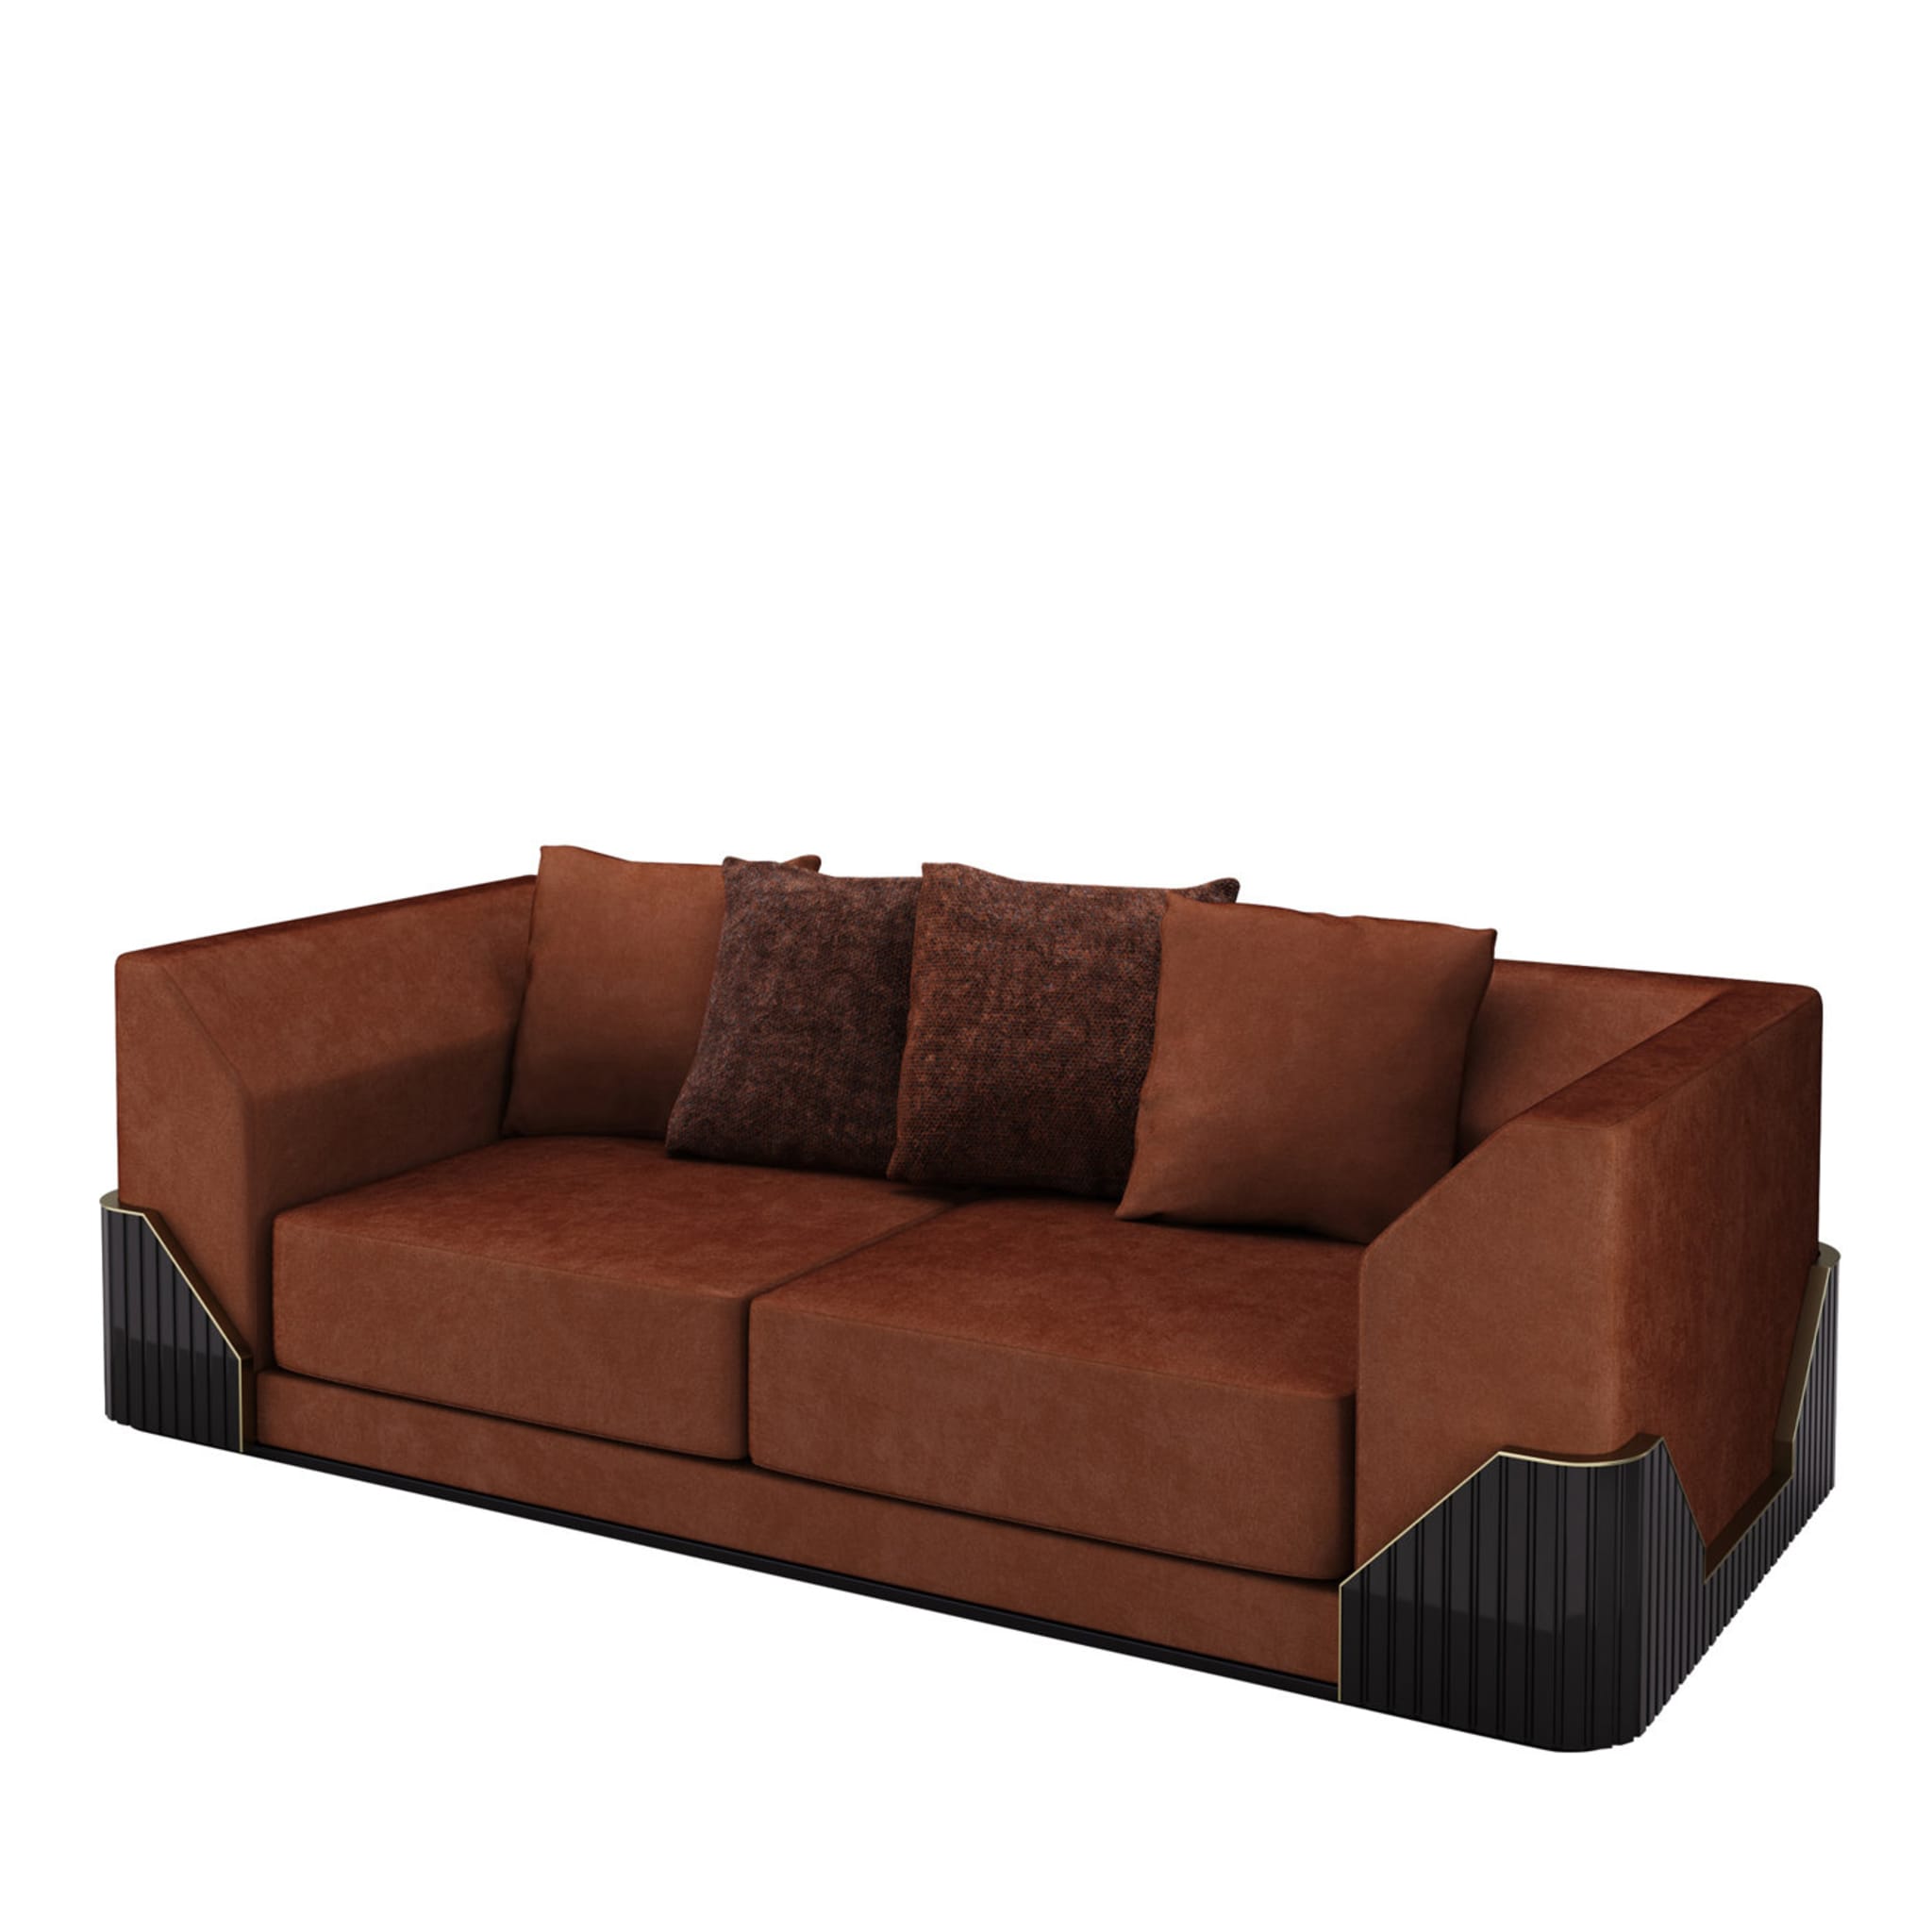 Douglas Velvet Rust-Colored Sofa - Main view